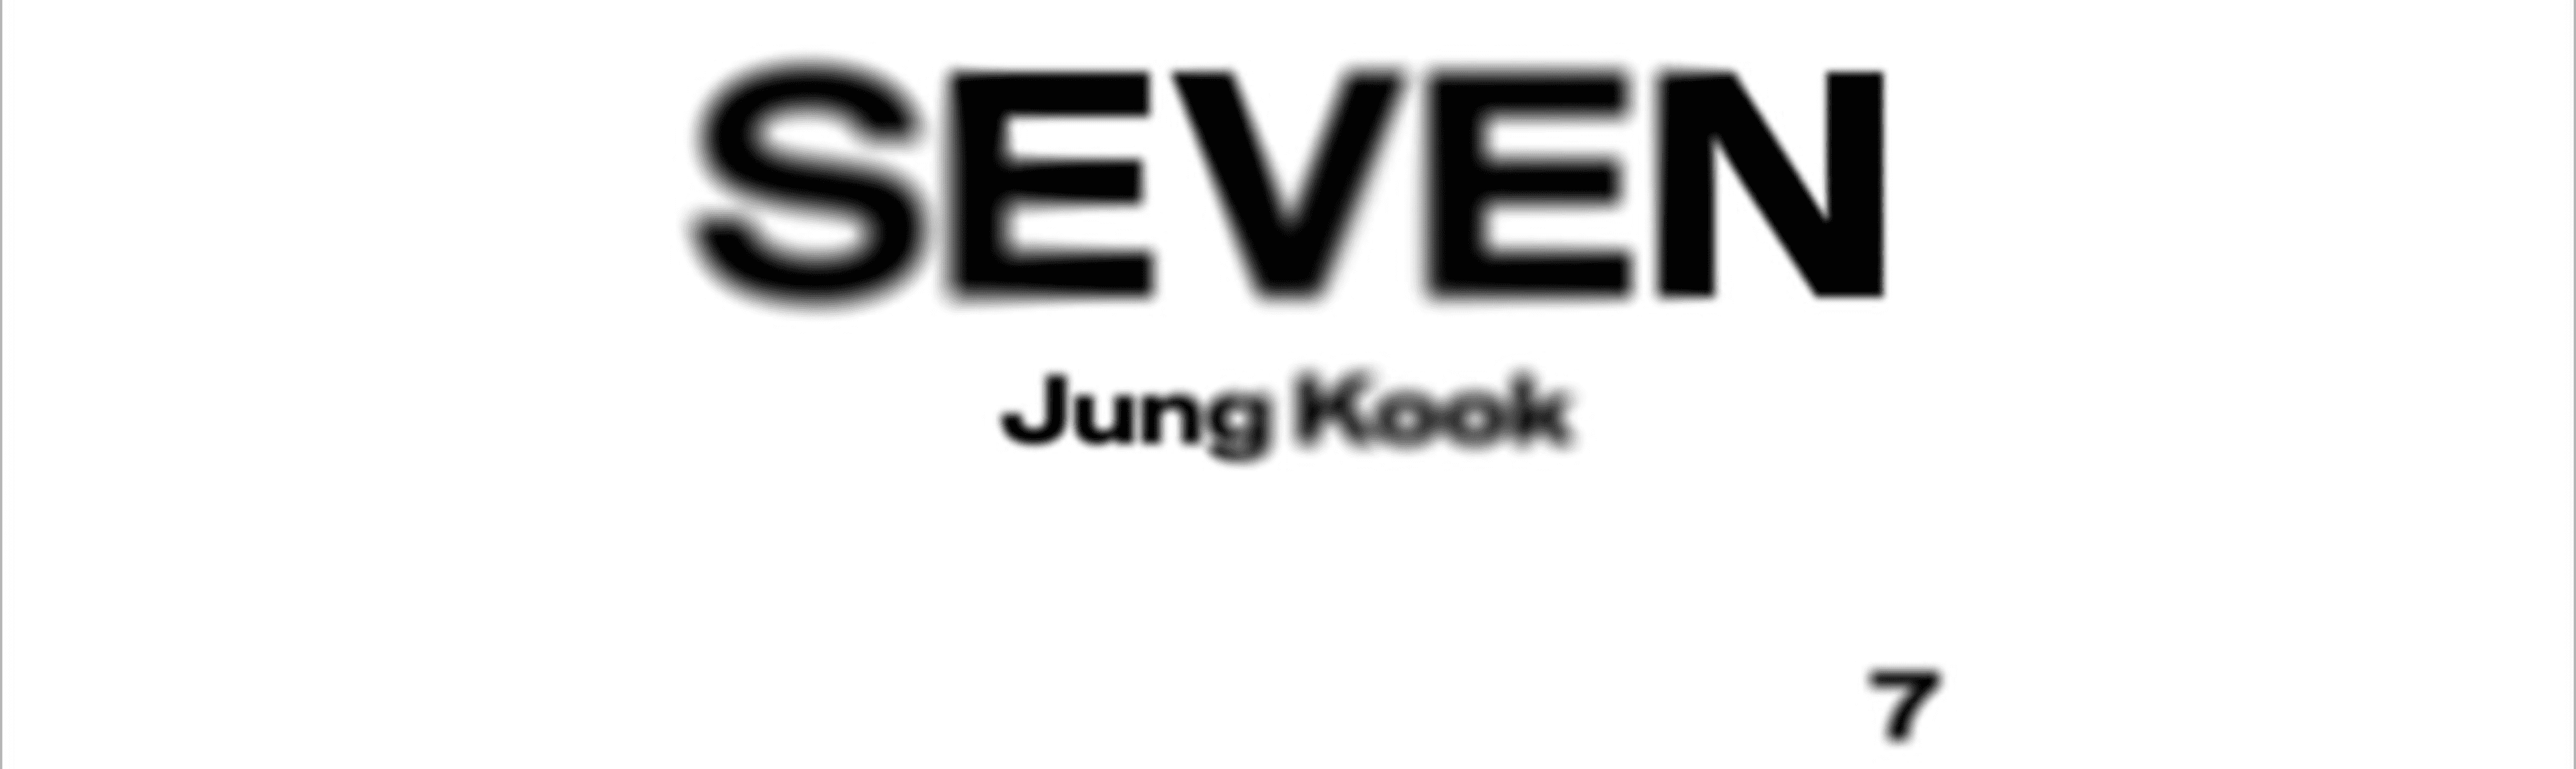 Seven - Jungkook digital solo single poster